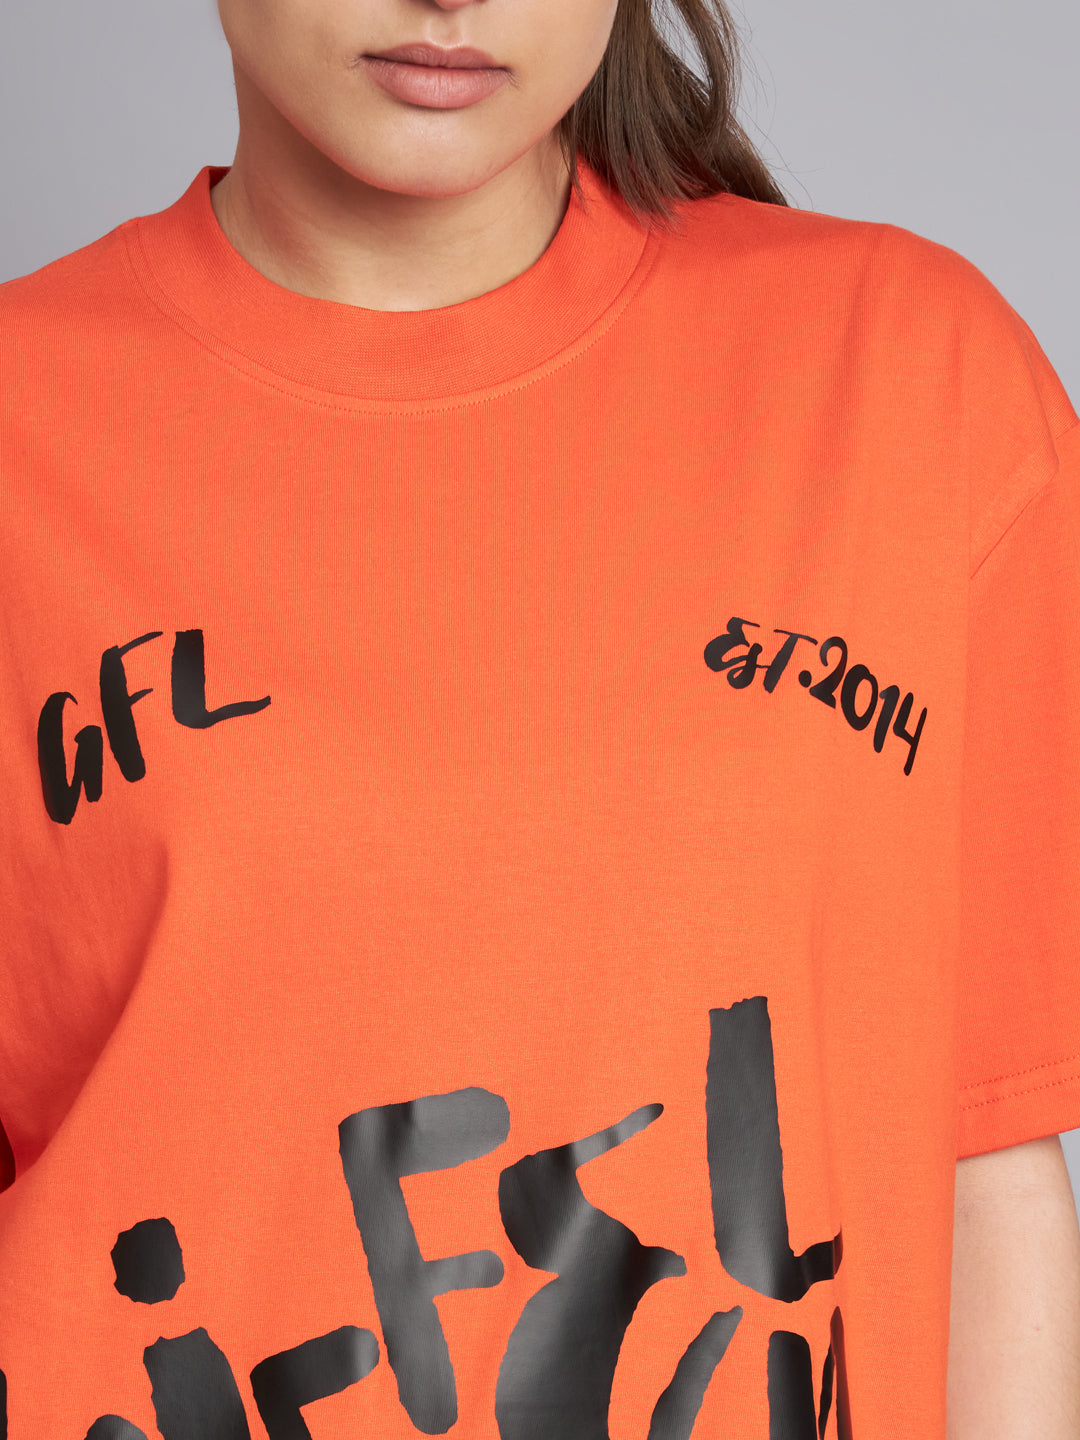 GRIFFEL Women's Printed Loose Fit Drop Shoulder Neon Orange T-shirt - griffel